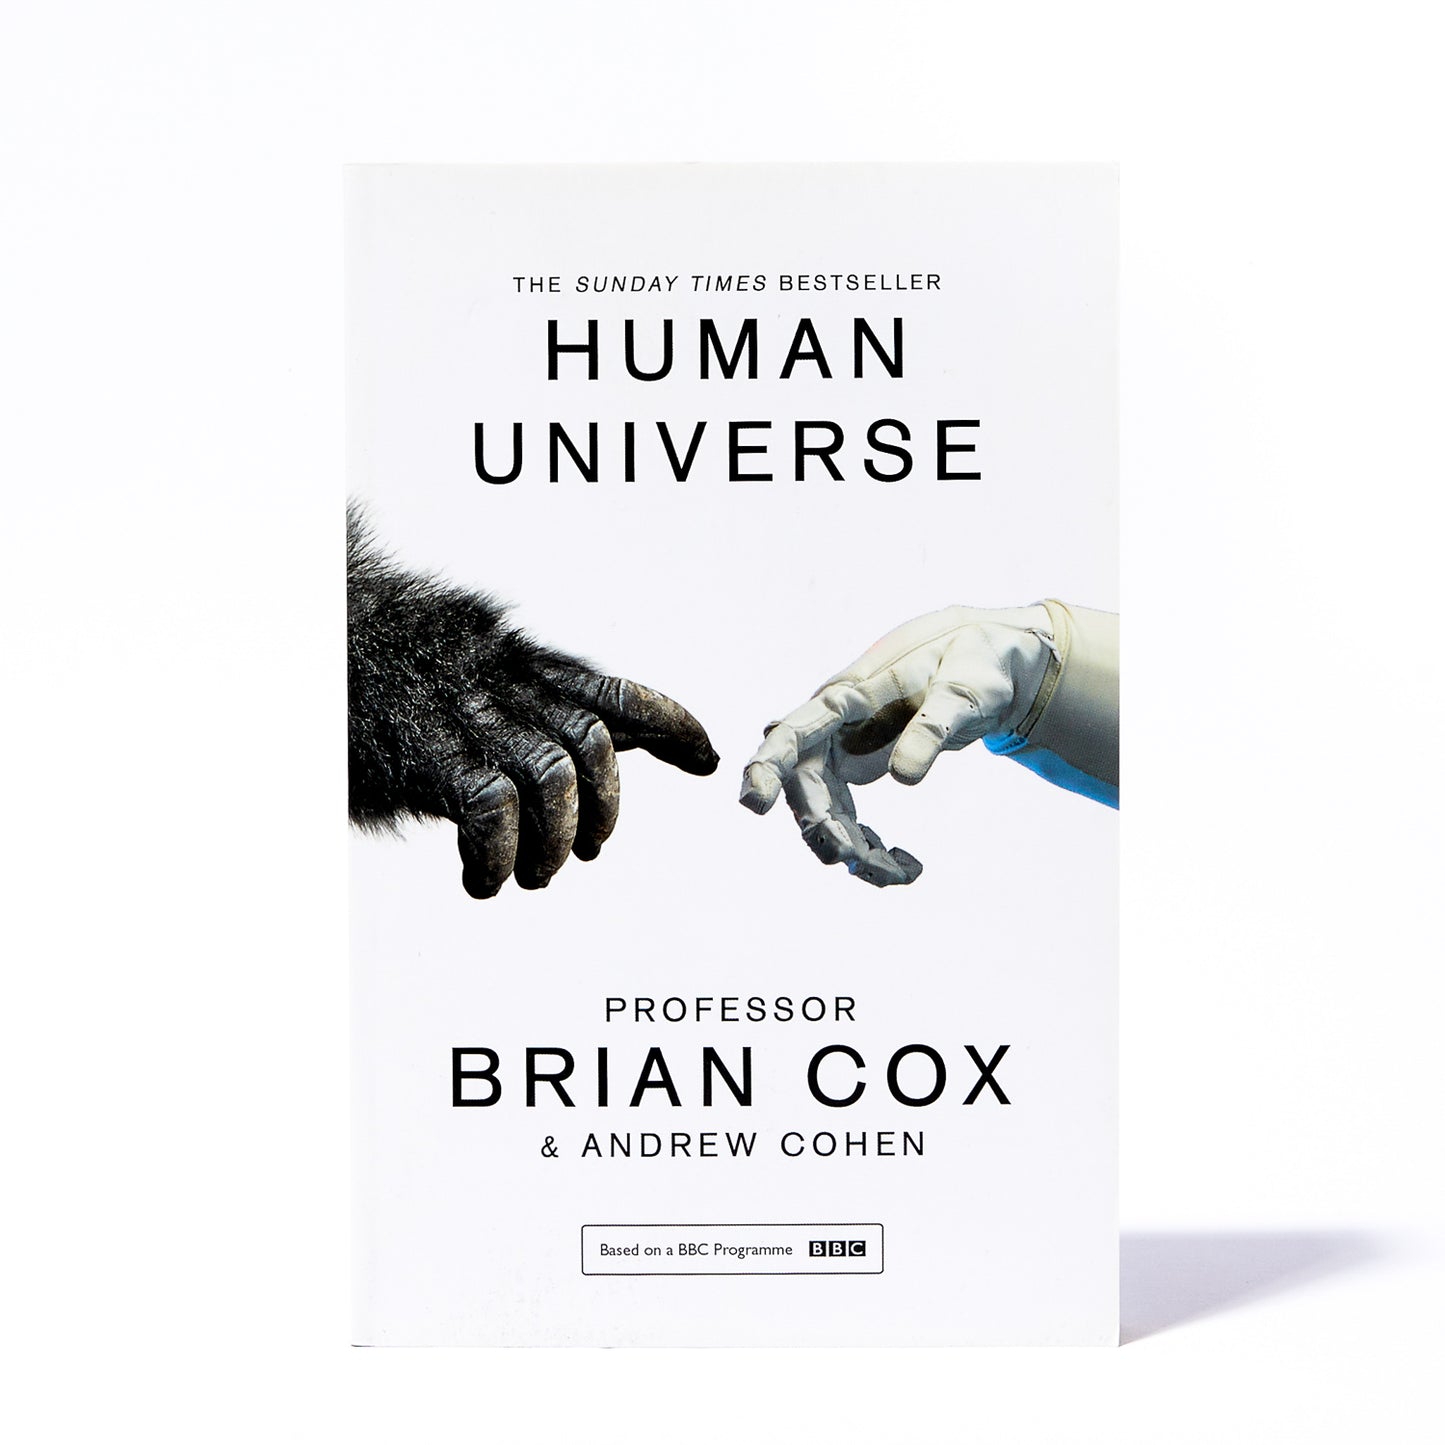 HUMAN UNIVERSE